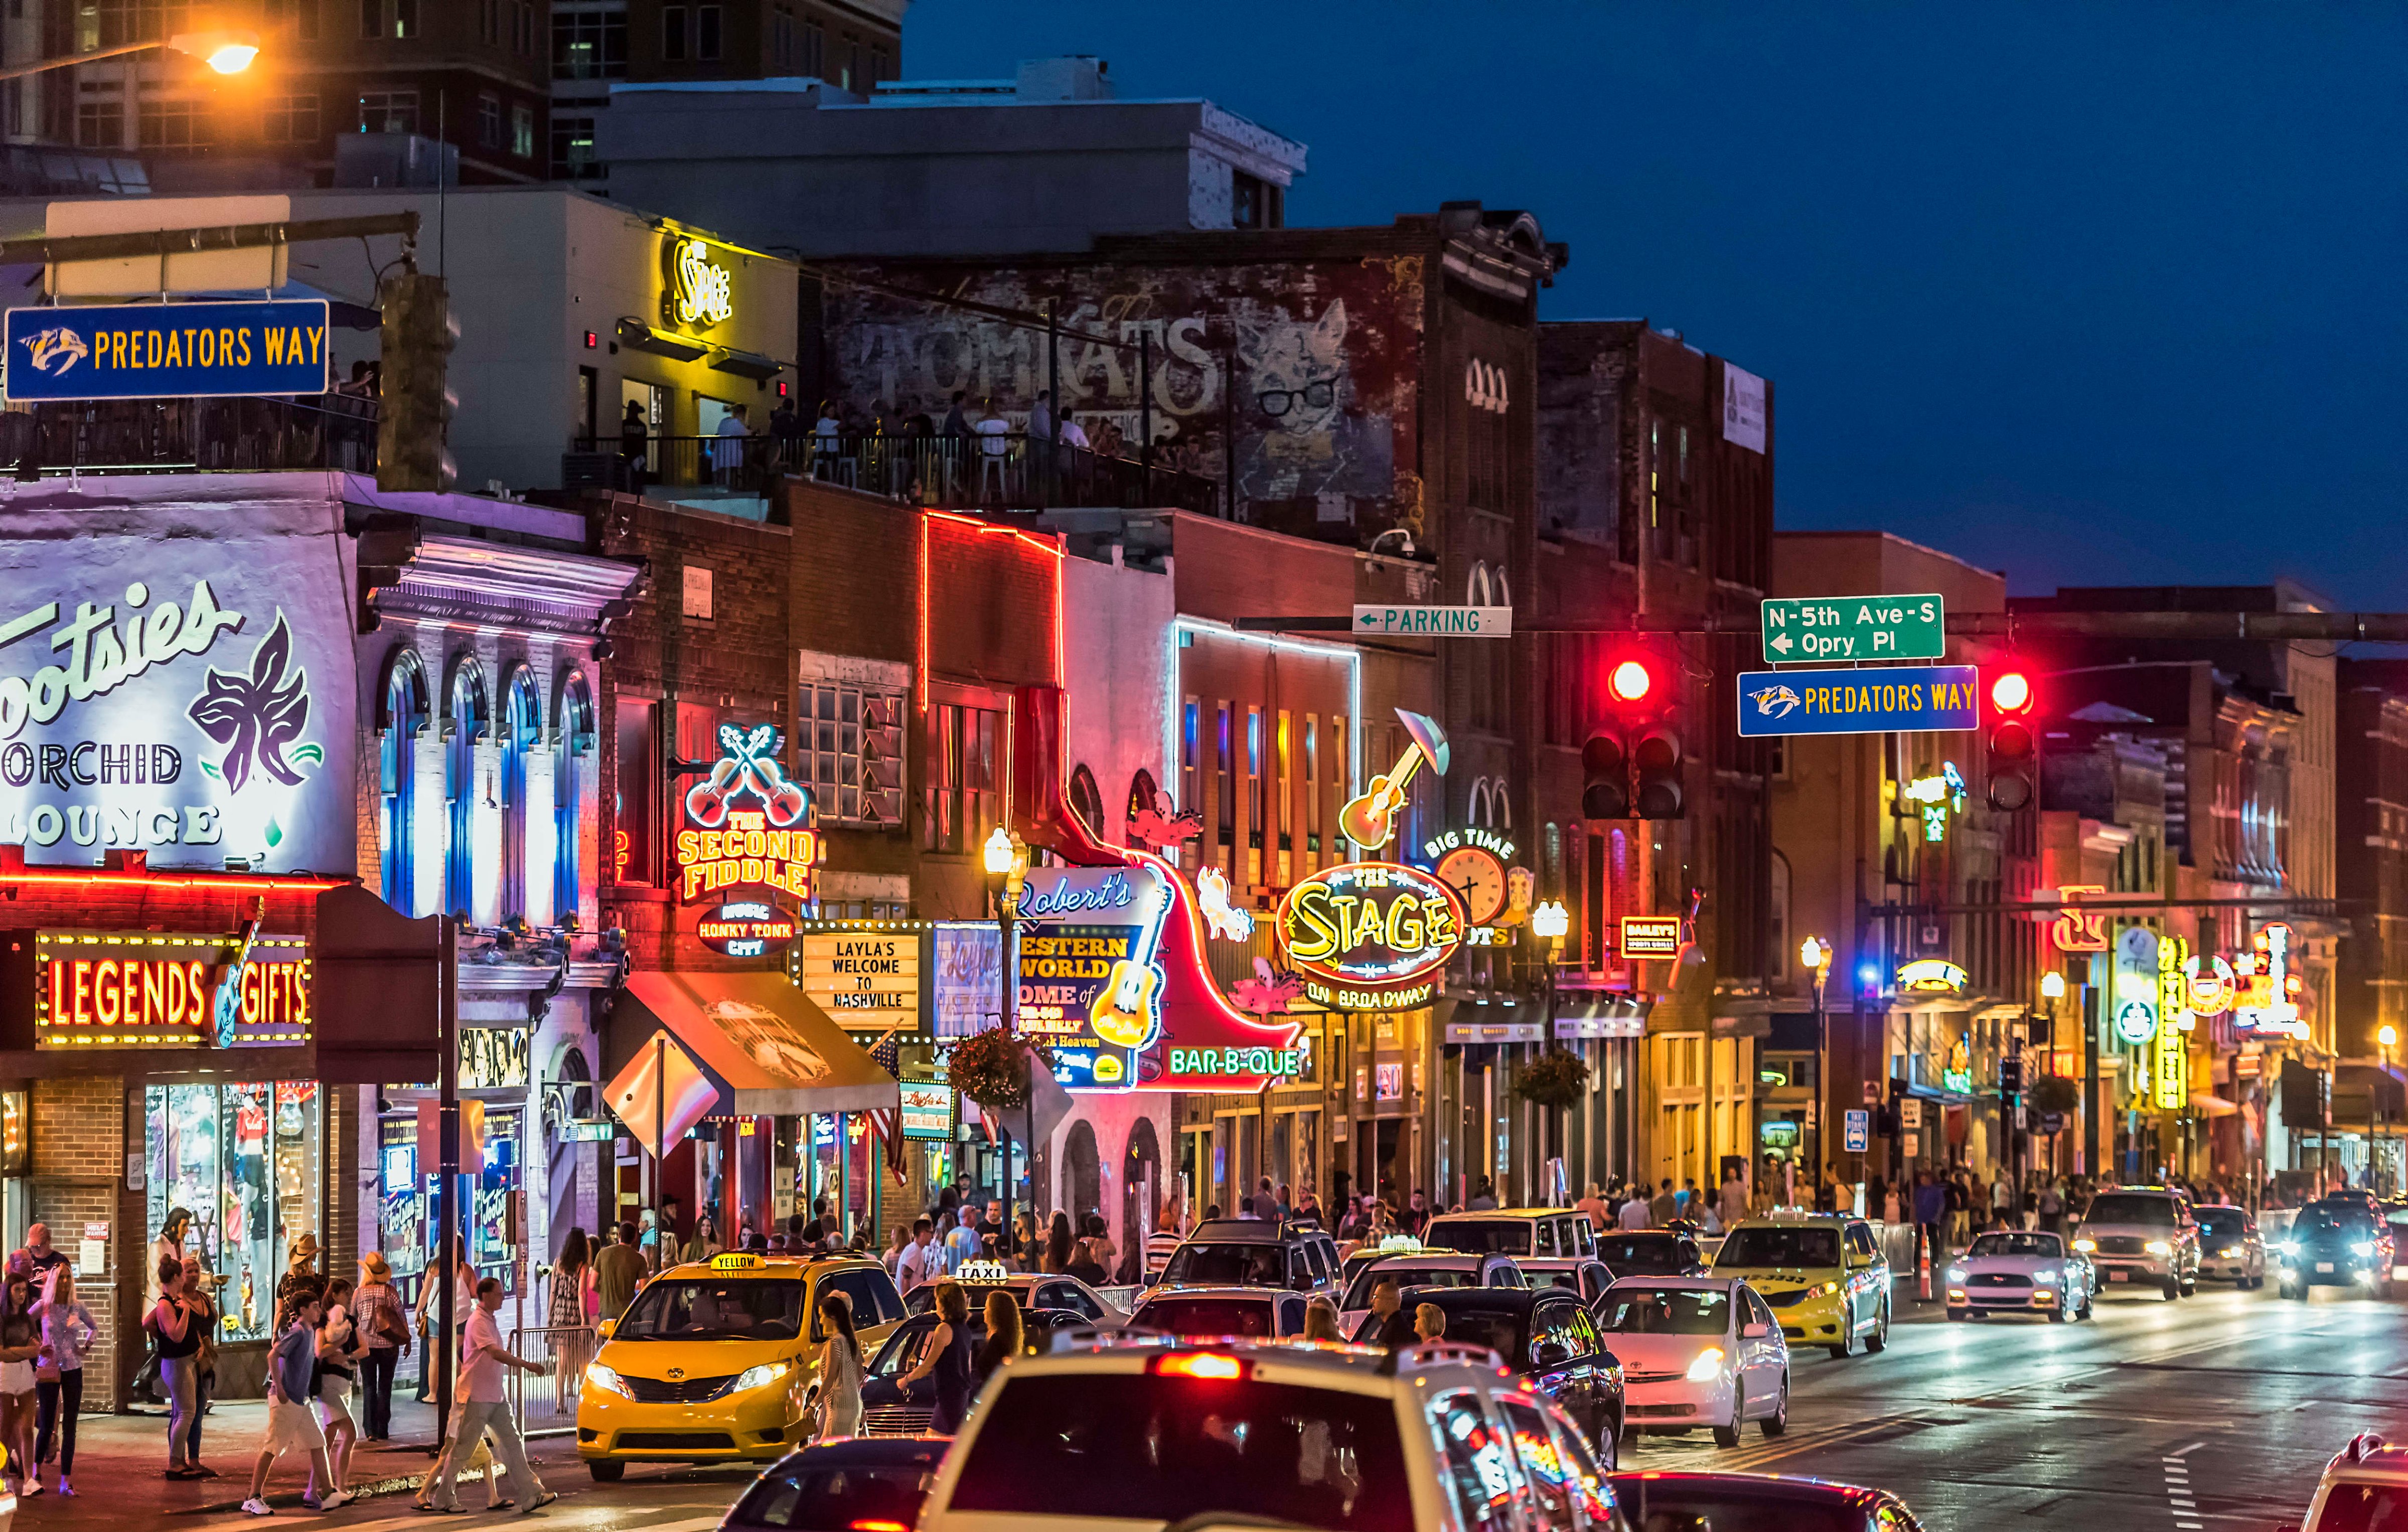 Country Music bars on Broadway in Nashville. (John Greim—LightRocket via Getty Images)